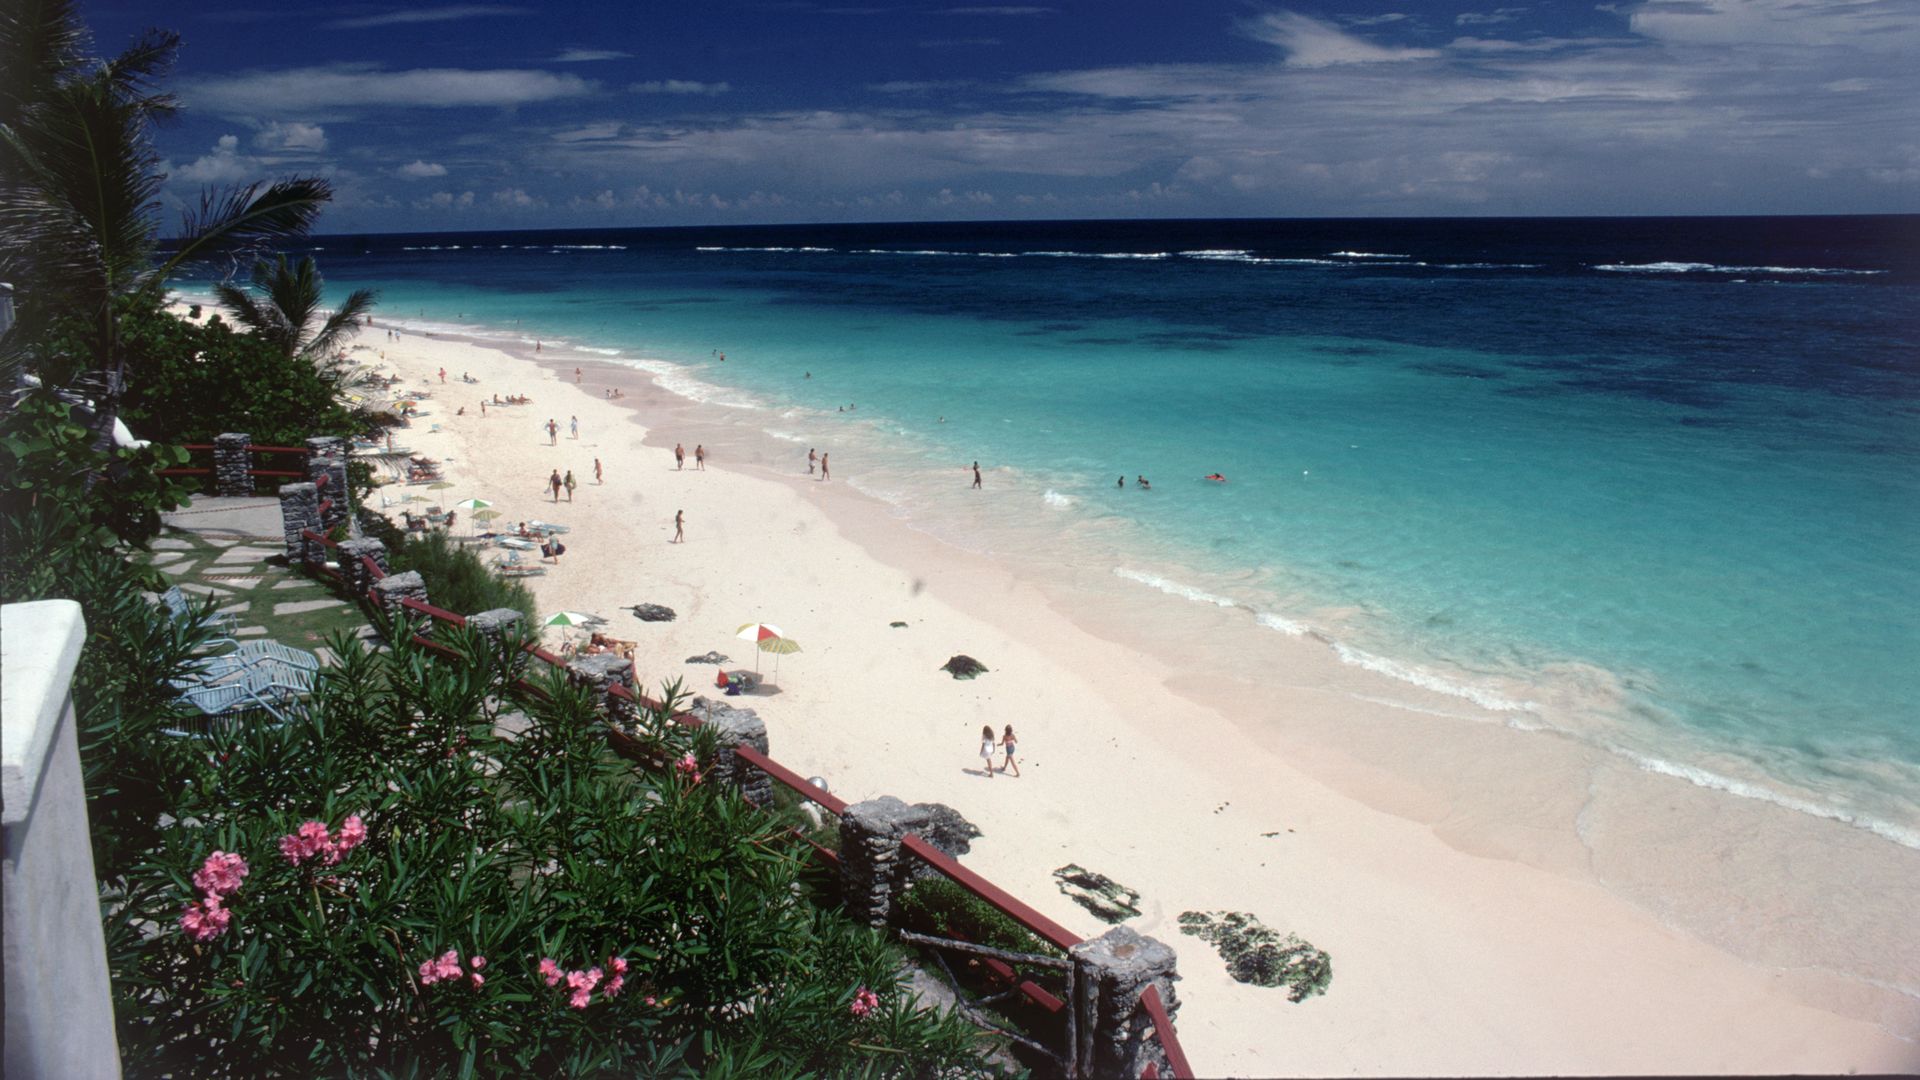  A view of Coral Beach, Bermuda